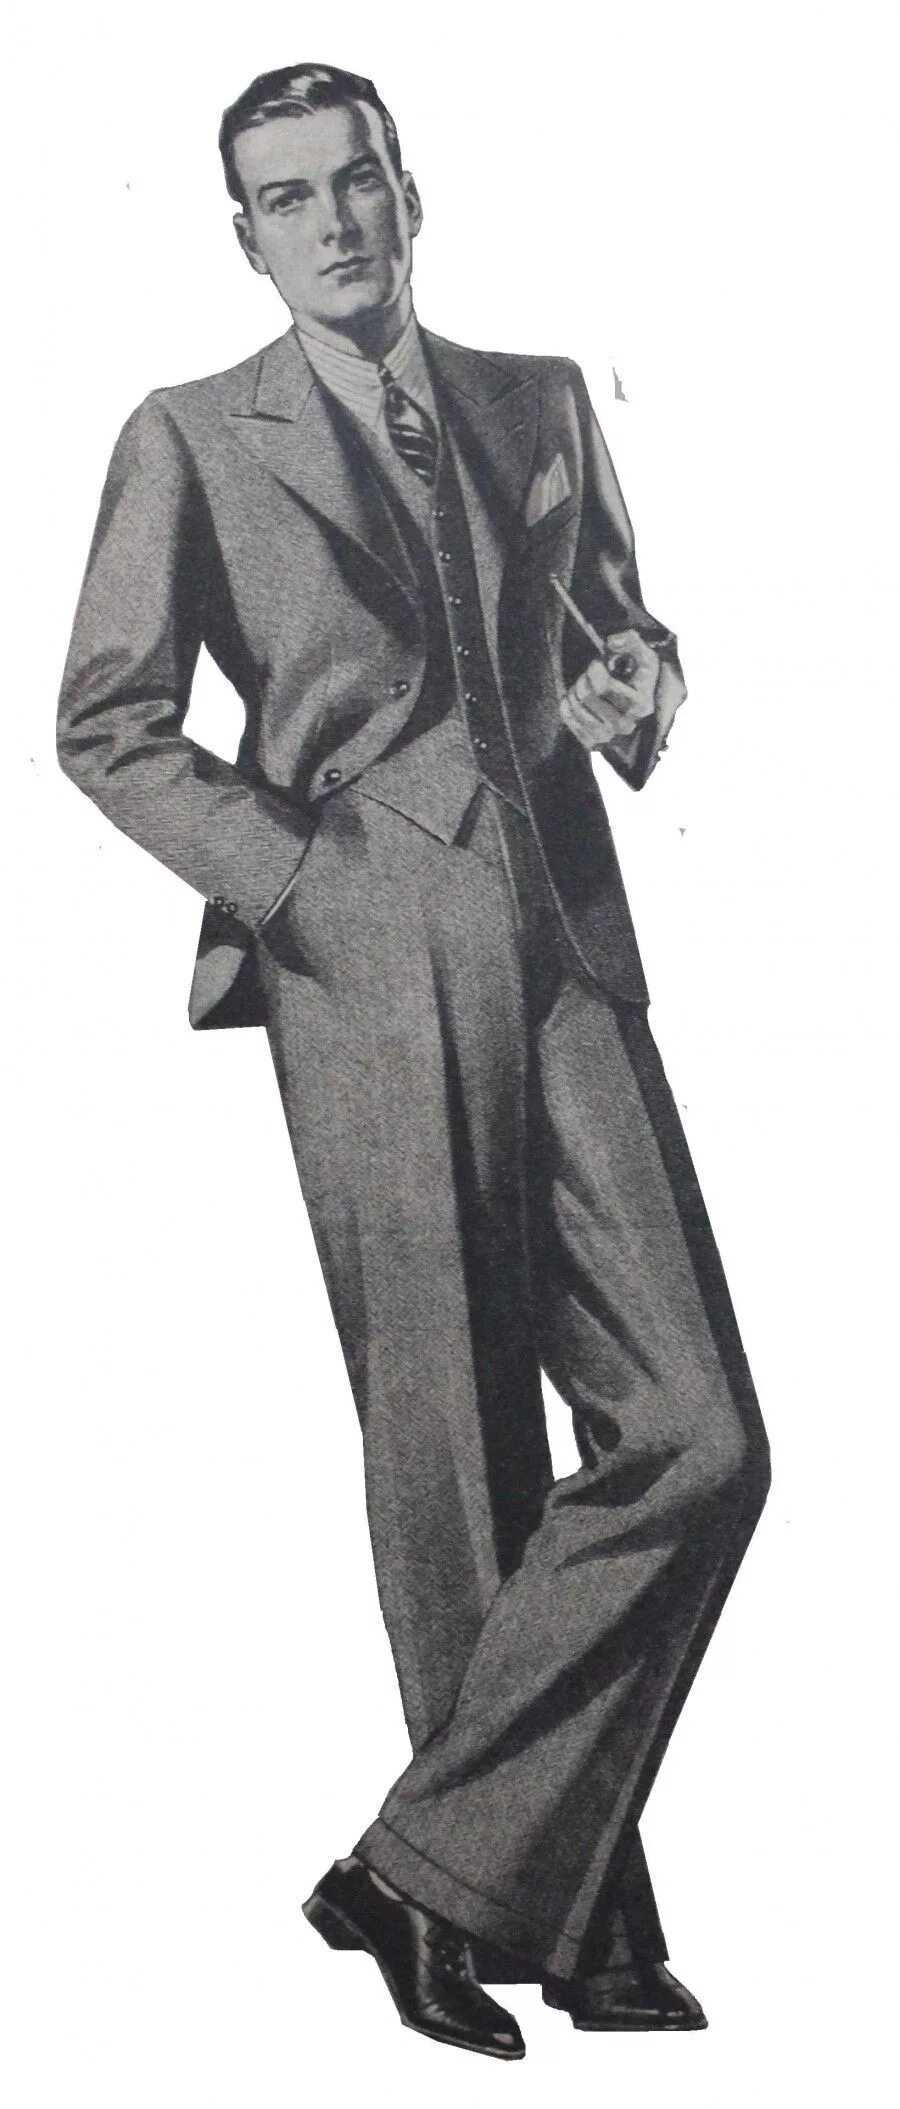 Костюм Зут 1940. Стиль "Зут" (Zoot Suit). Мода 1940 Америка мужчины. Костюмы 50-х годов мужские.